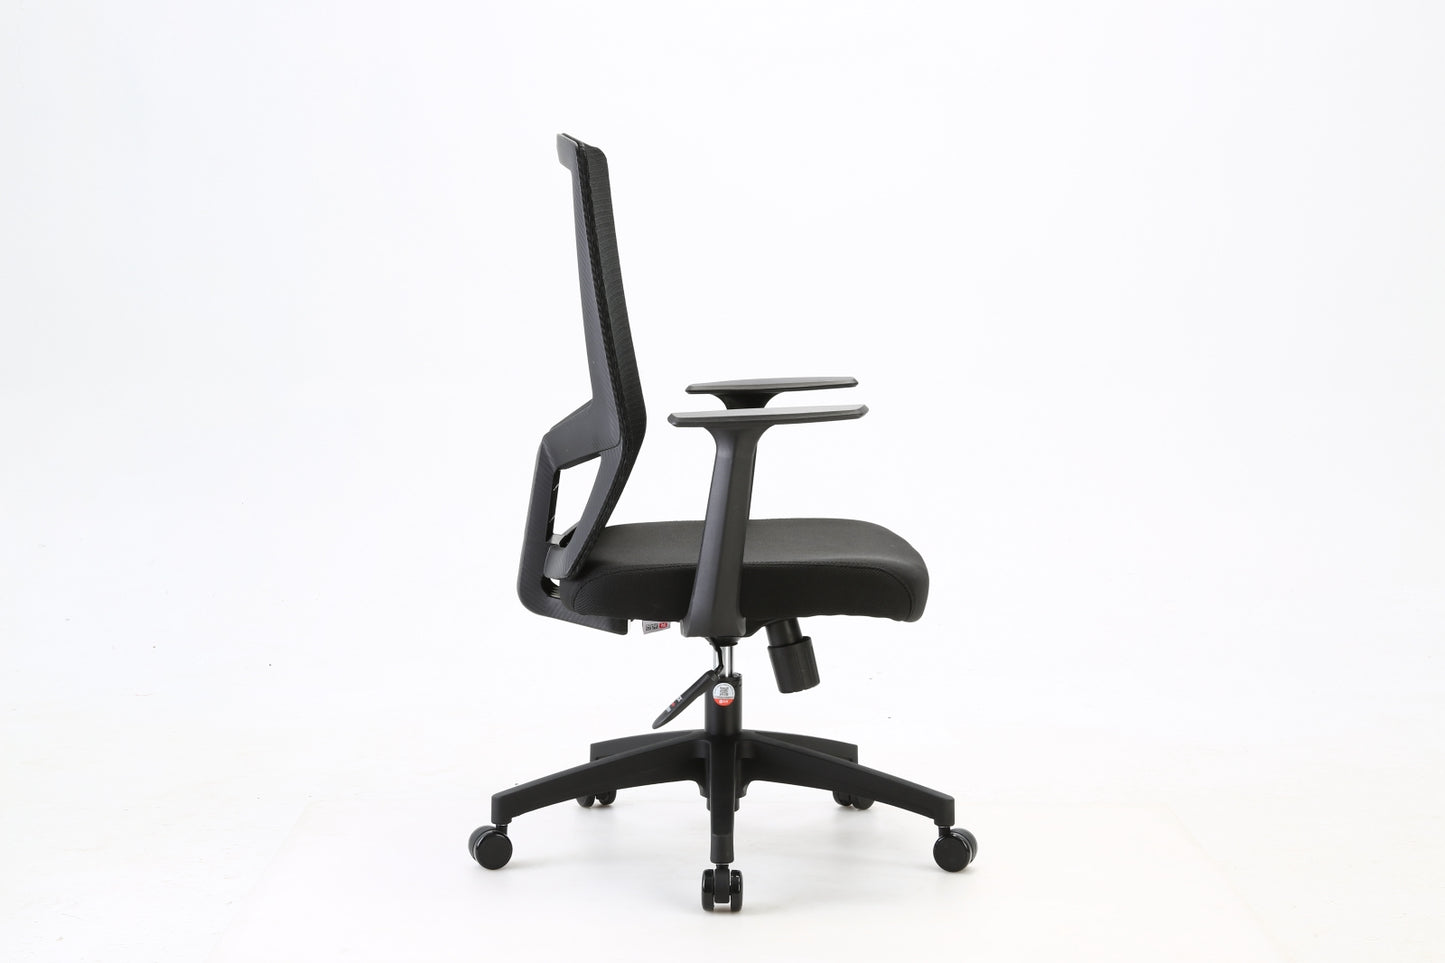 Sihoo M87 Ergonomic Chair